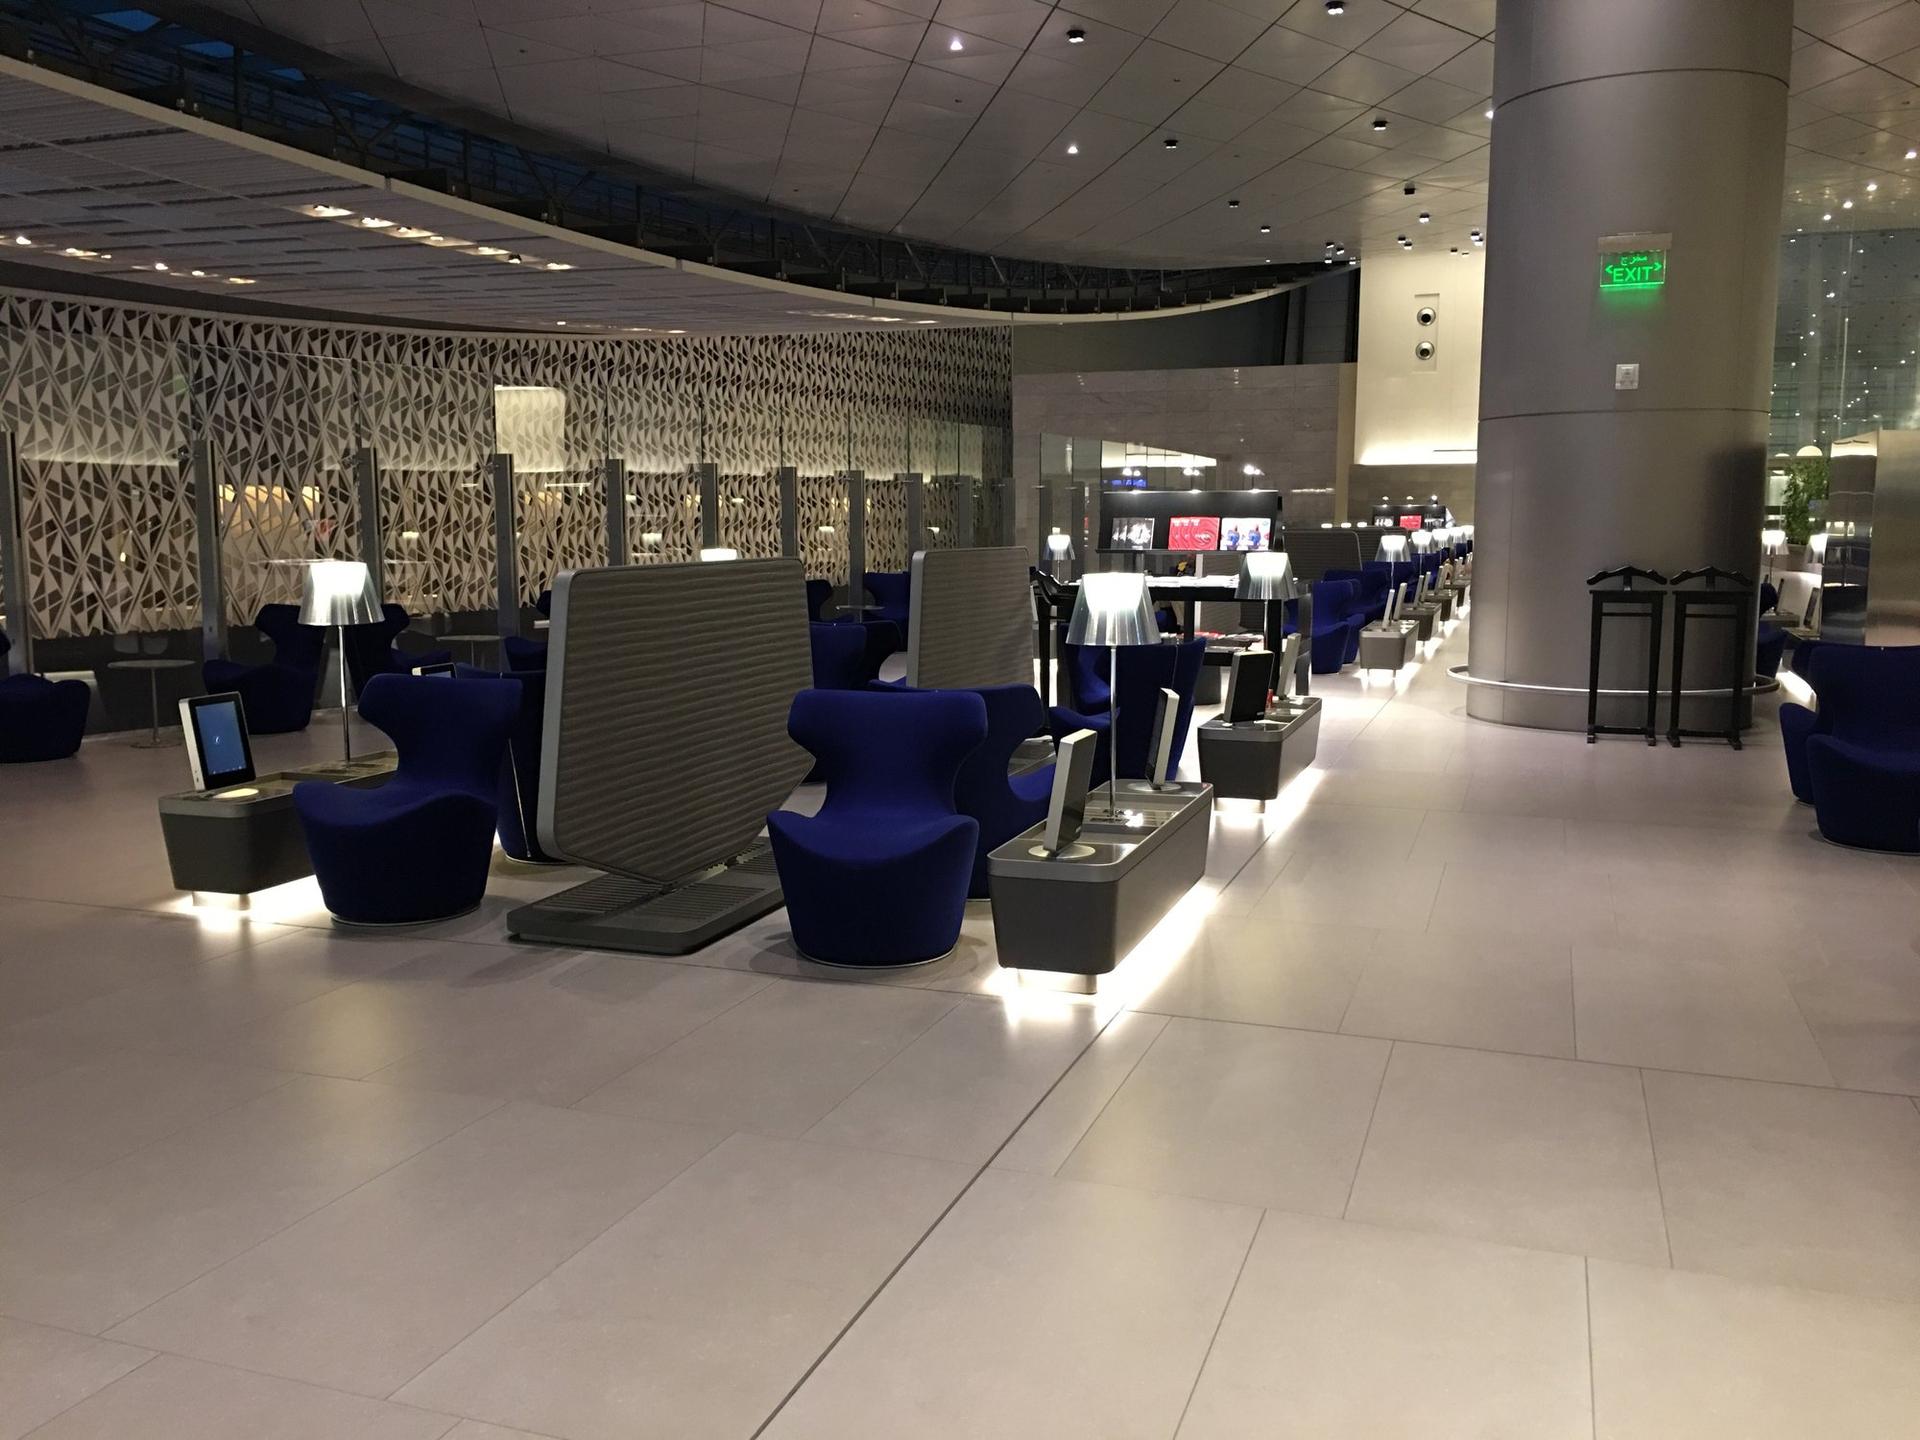 Qatar Airways Al Mourjan Business Class Lounge image 91 of 100